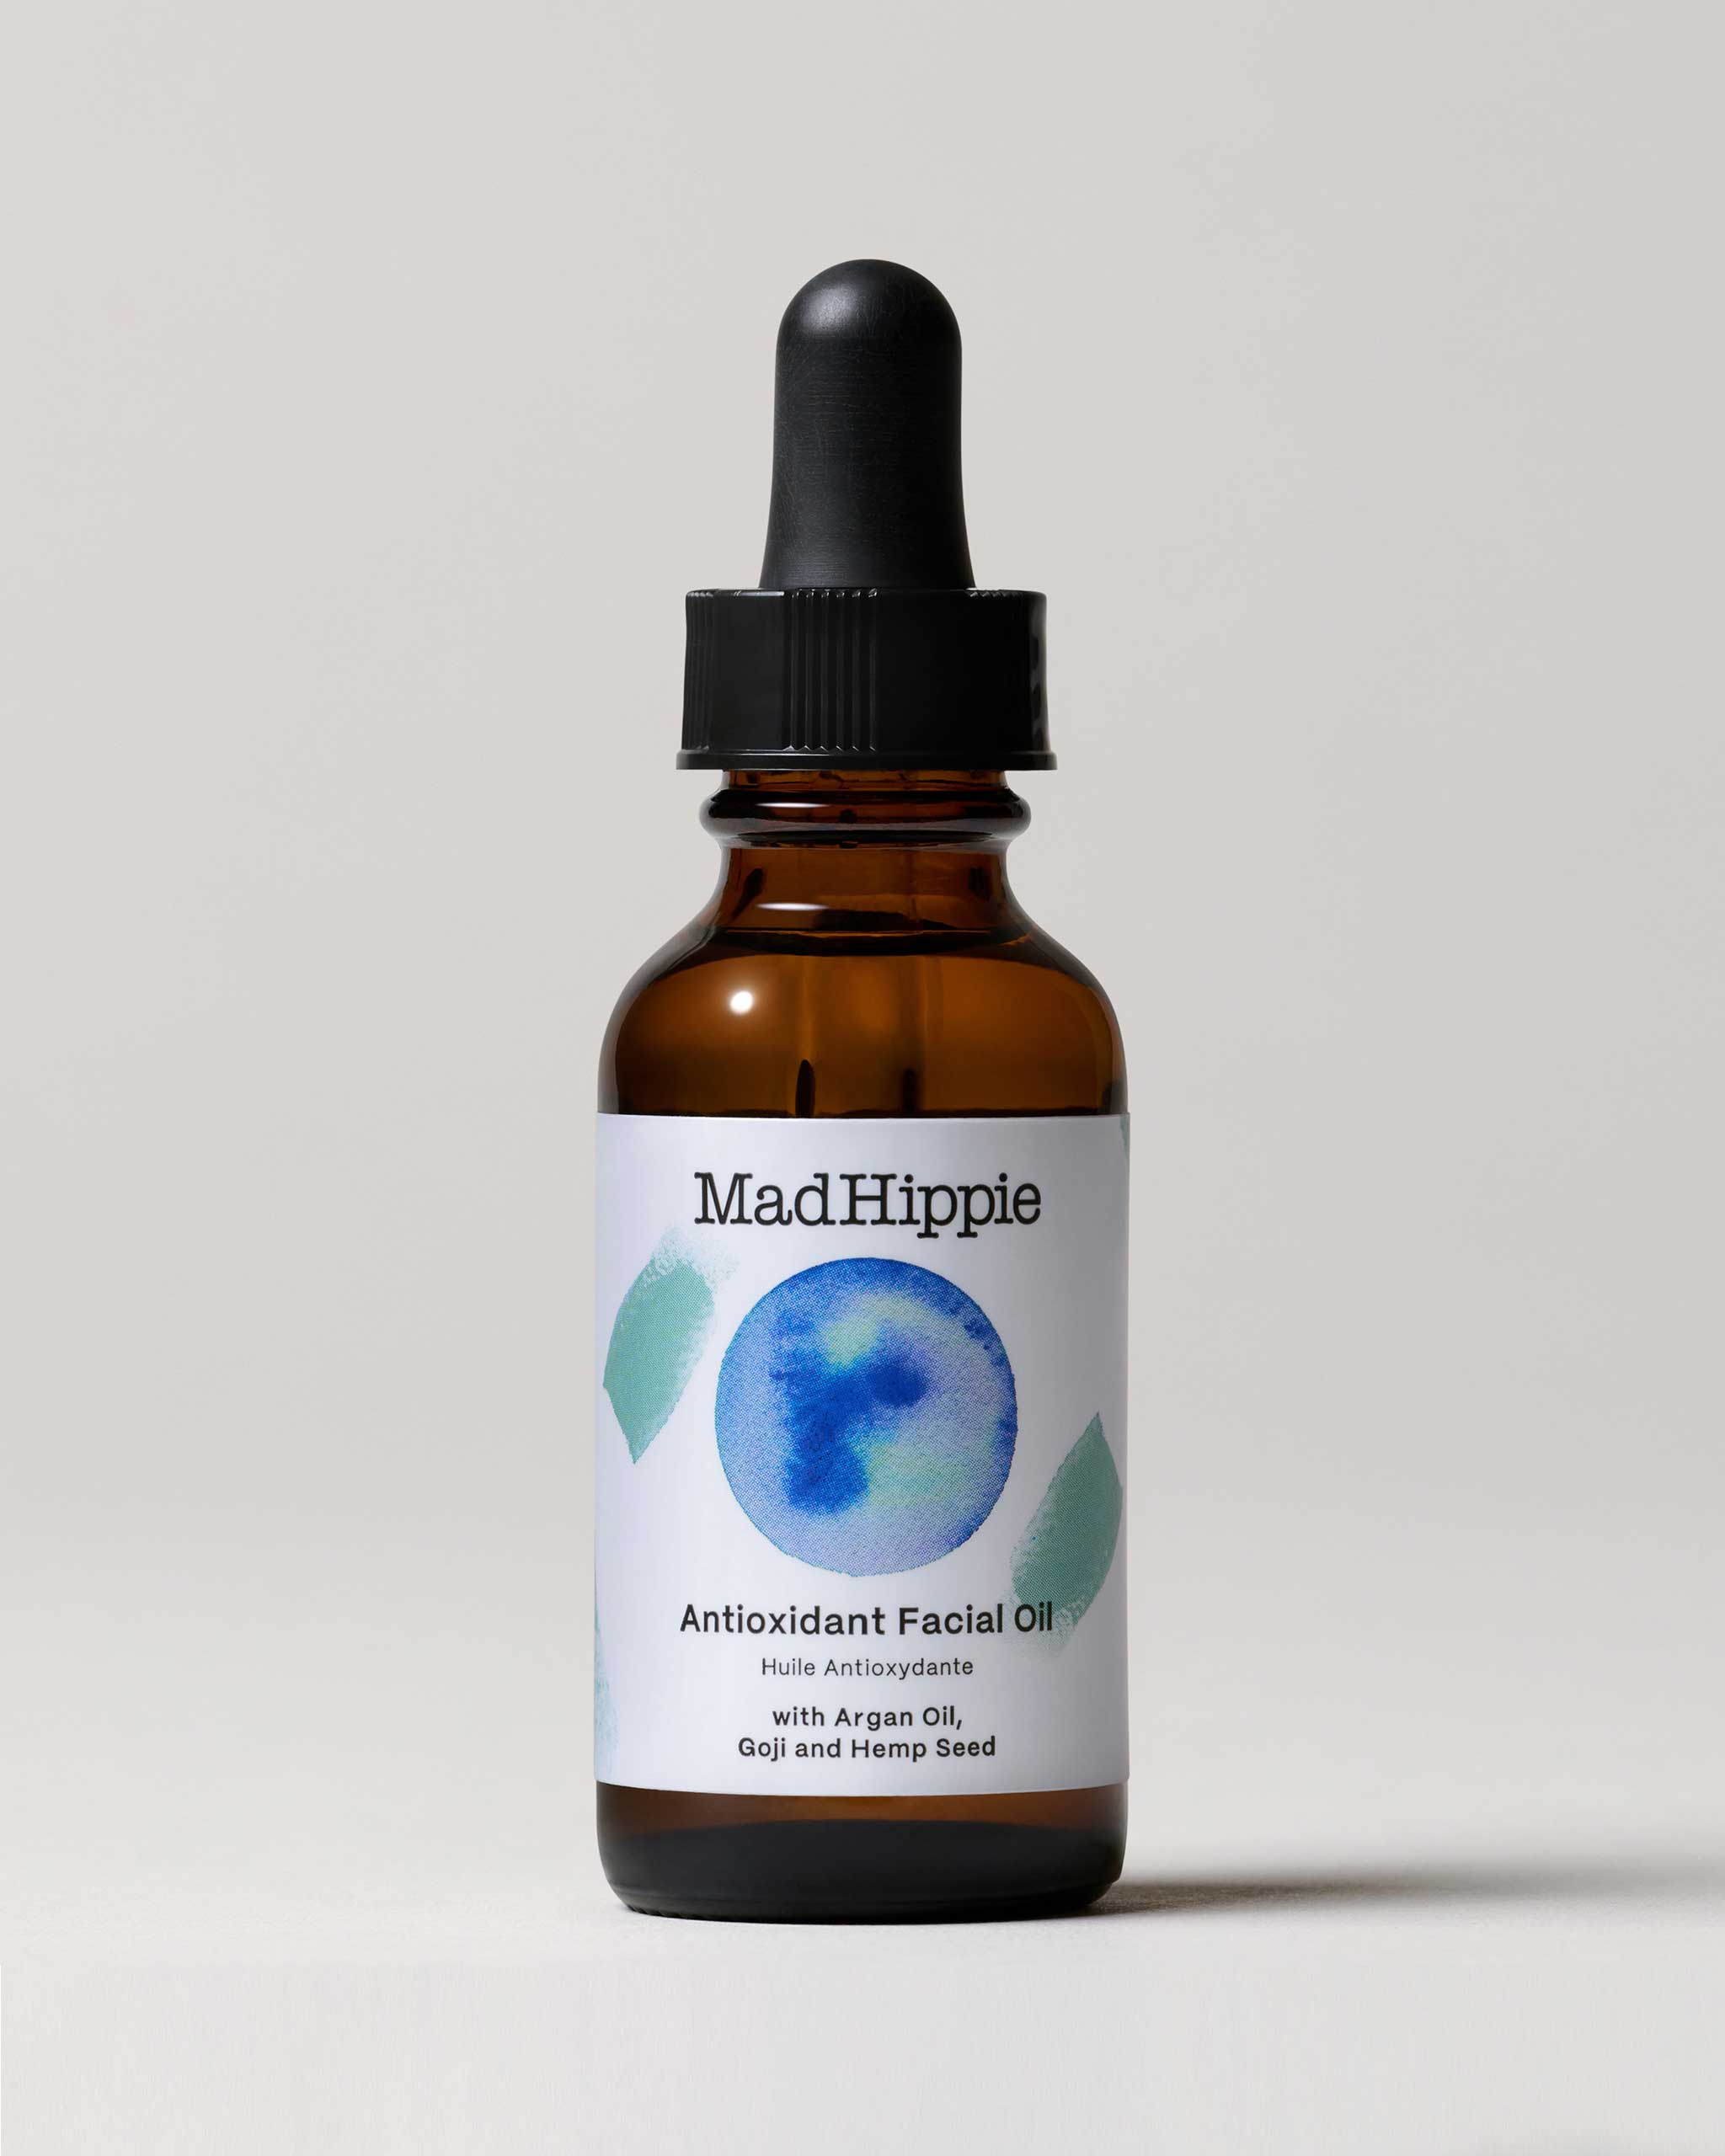 Antioxidant Facial Oil with organic argan oil